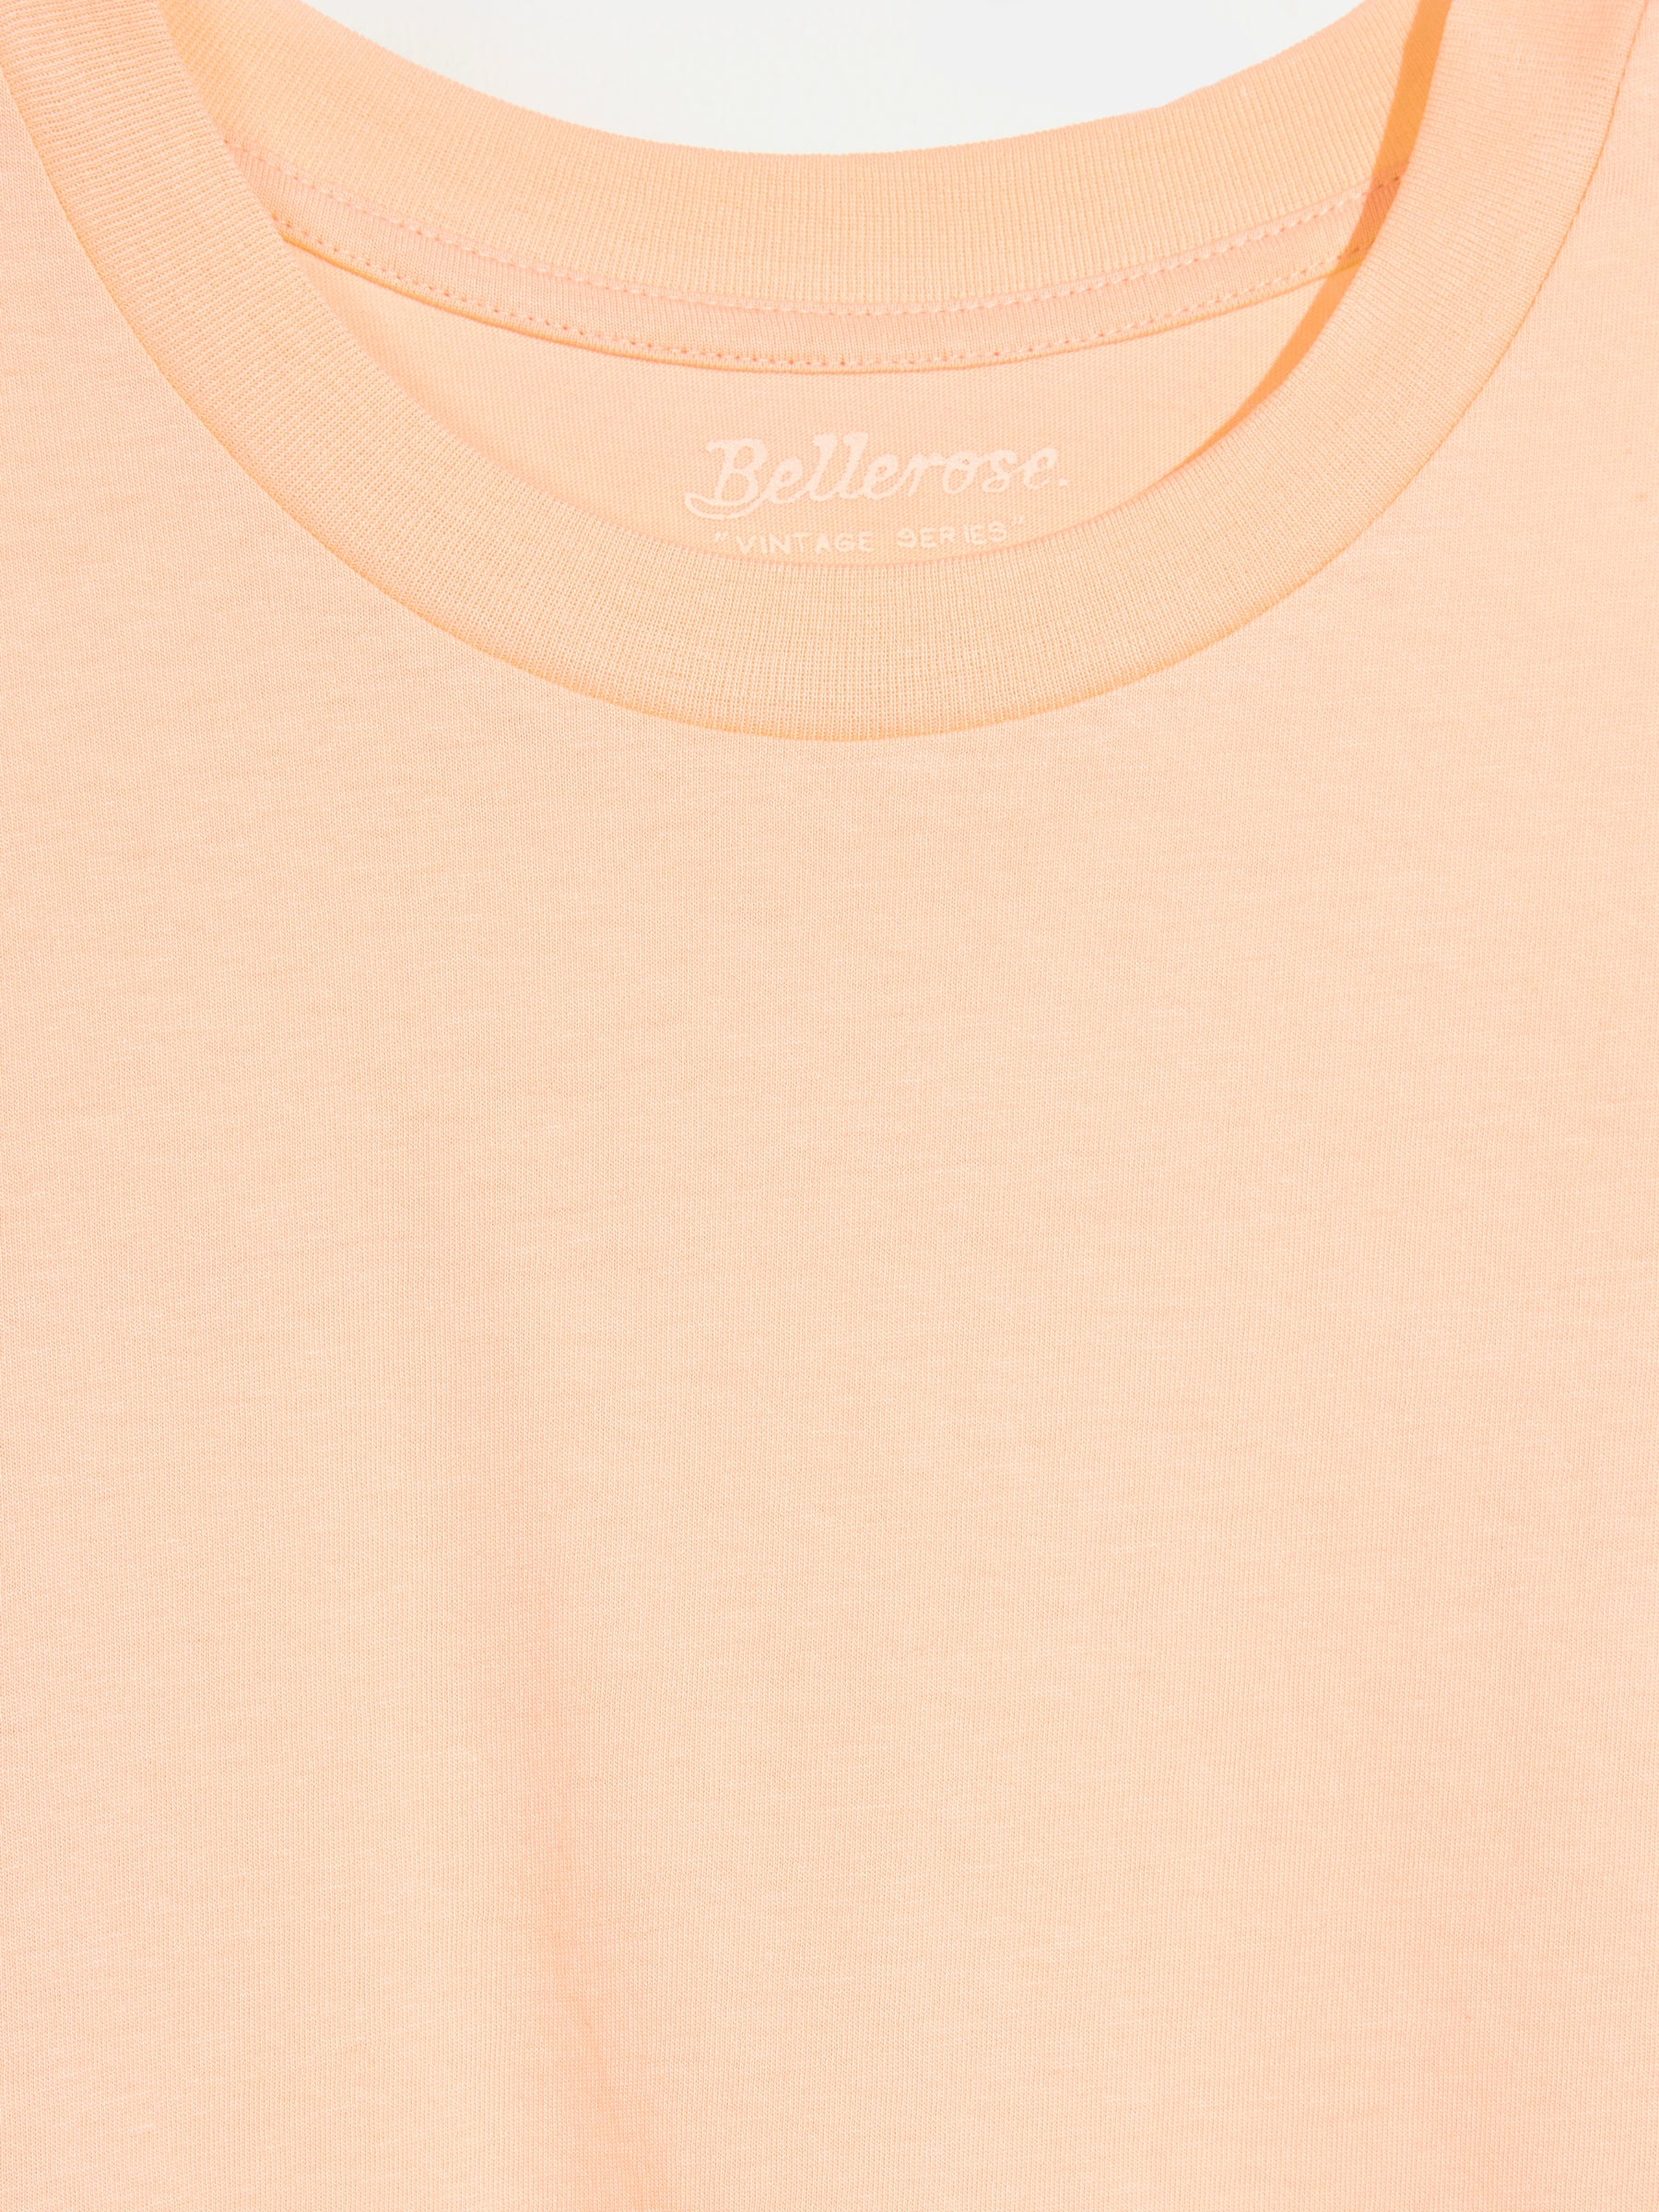 Bellerose - Crom T-shirt